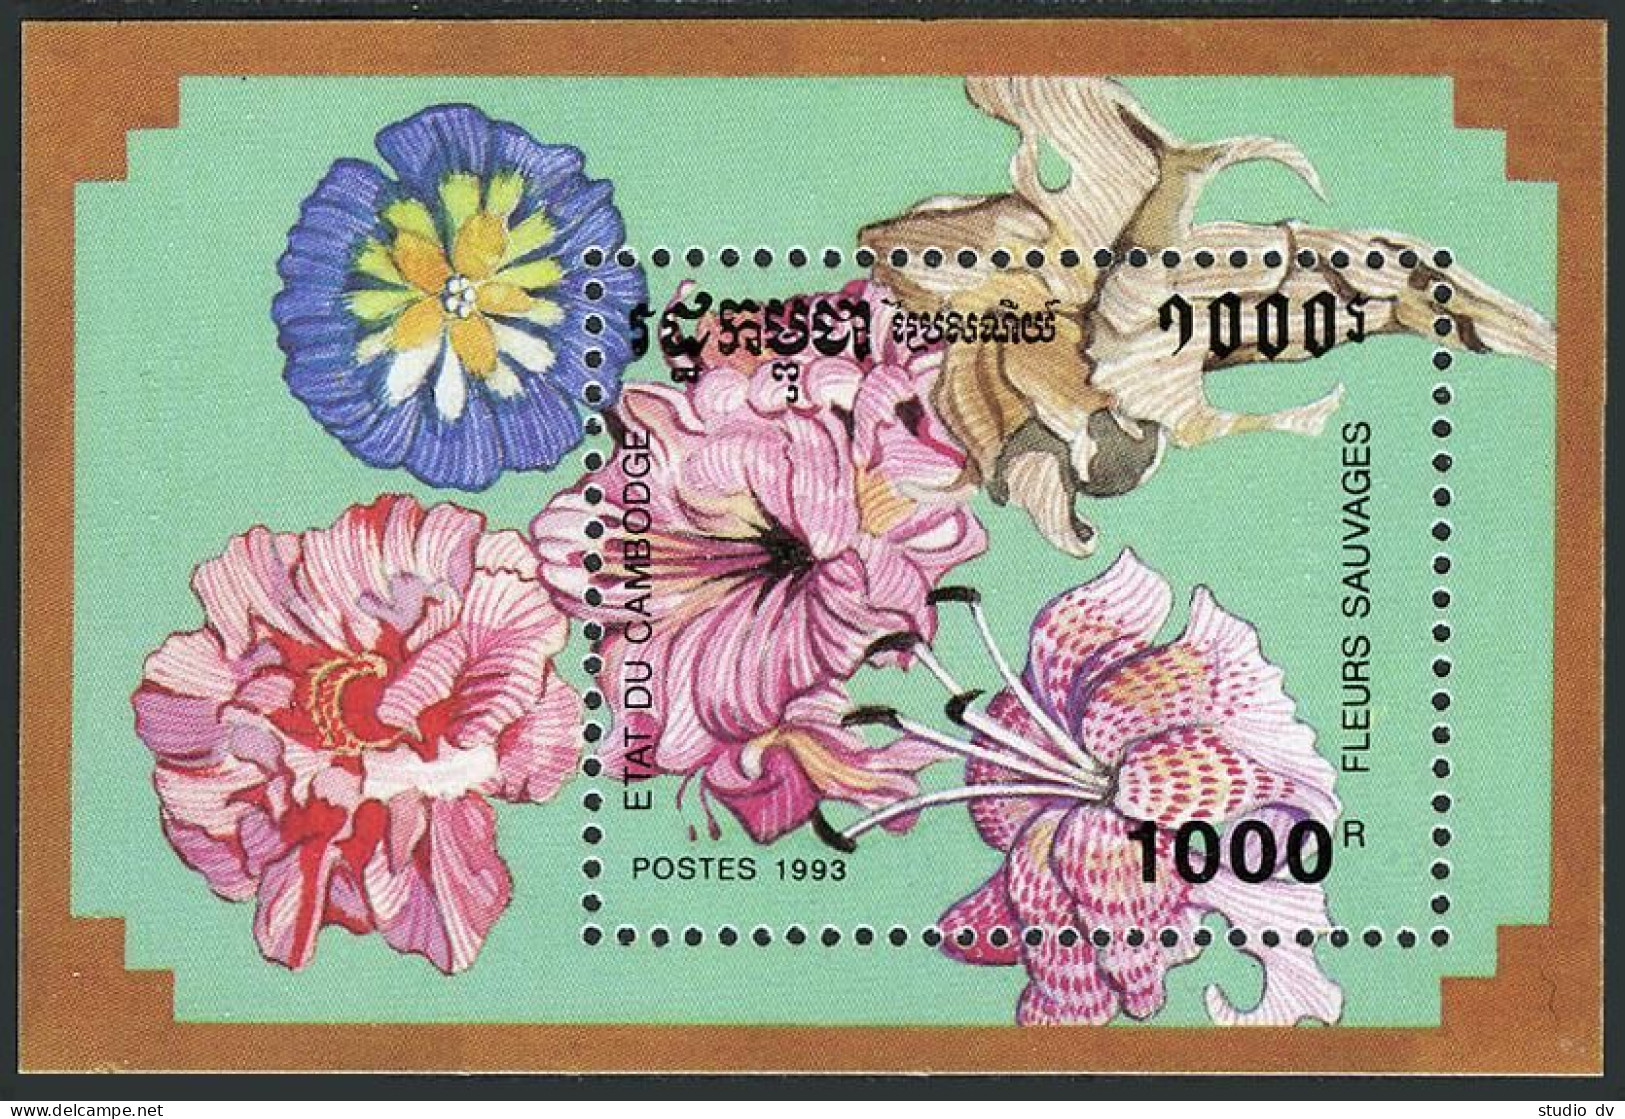 Cambodia 1264-1269,MNH.Michel 1340-1344,Bl.196. Flowers 1993:Lilium,Camellia. - Kambodscha